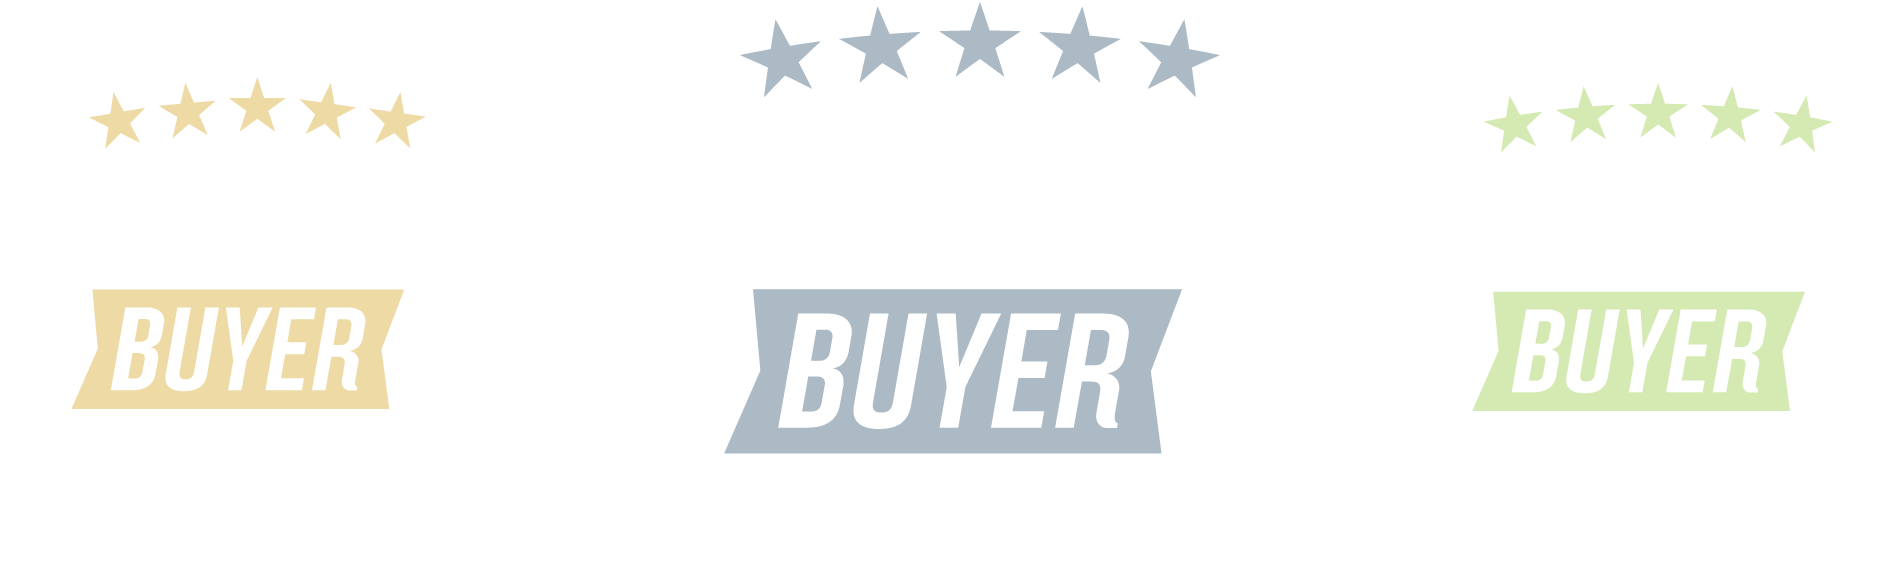 Restoration Plumbing is a Better Buyer silver elite business.